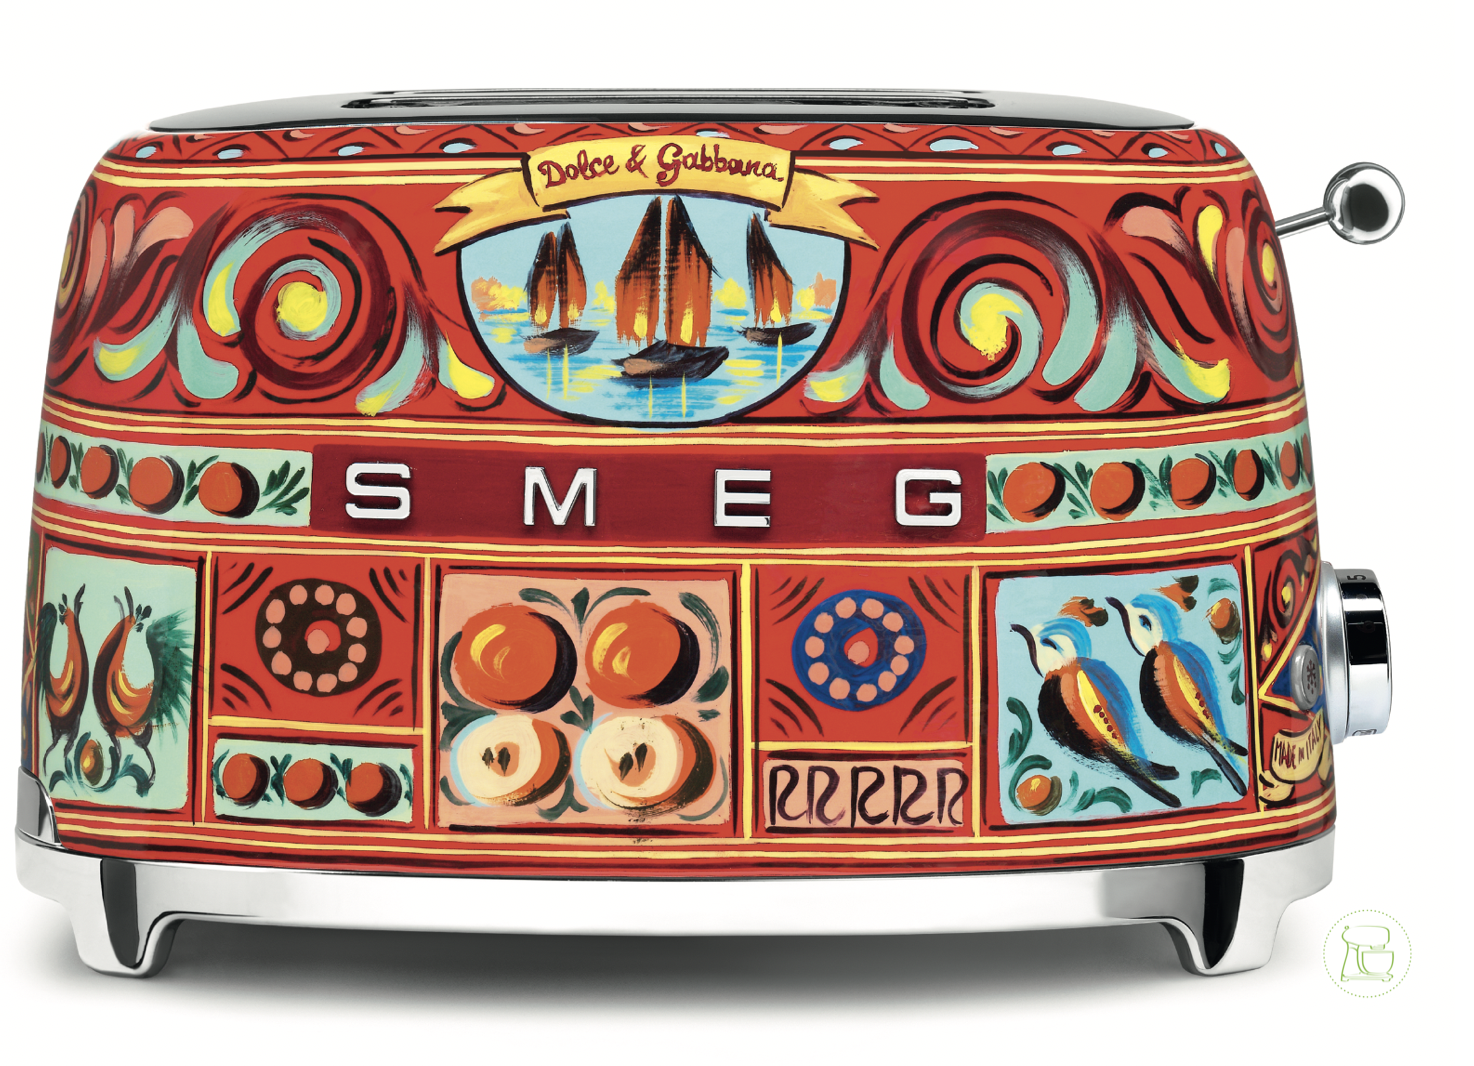 SMEG Toaster Dolce & Gabbana